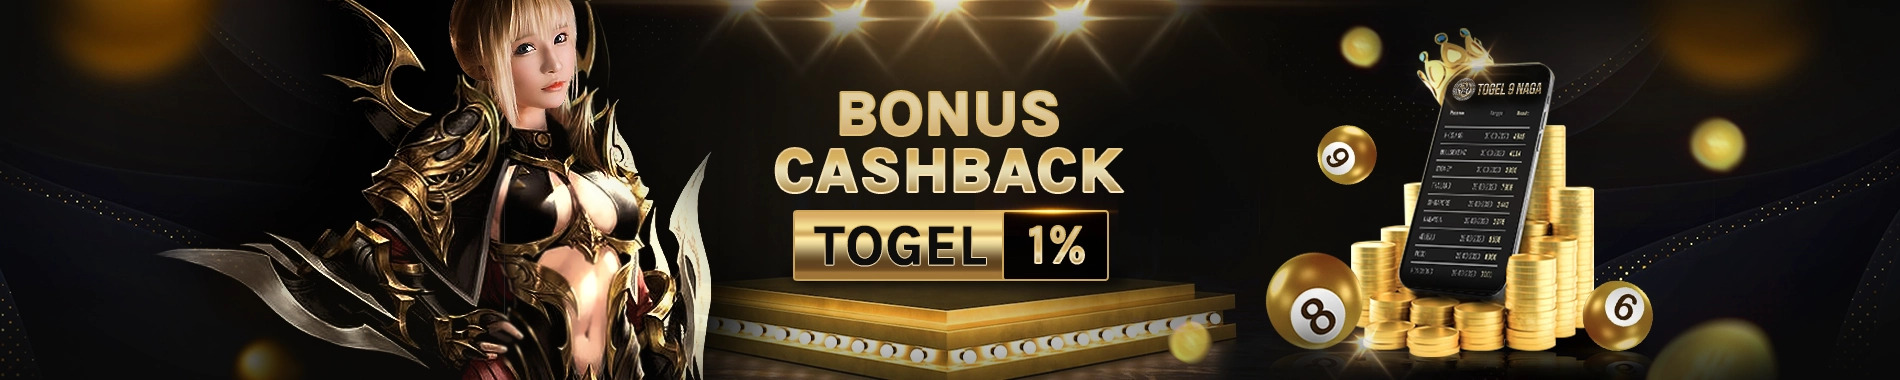 Cashback TOTO/TOGEL 1% Tanpa Batas Togel9Naga